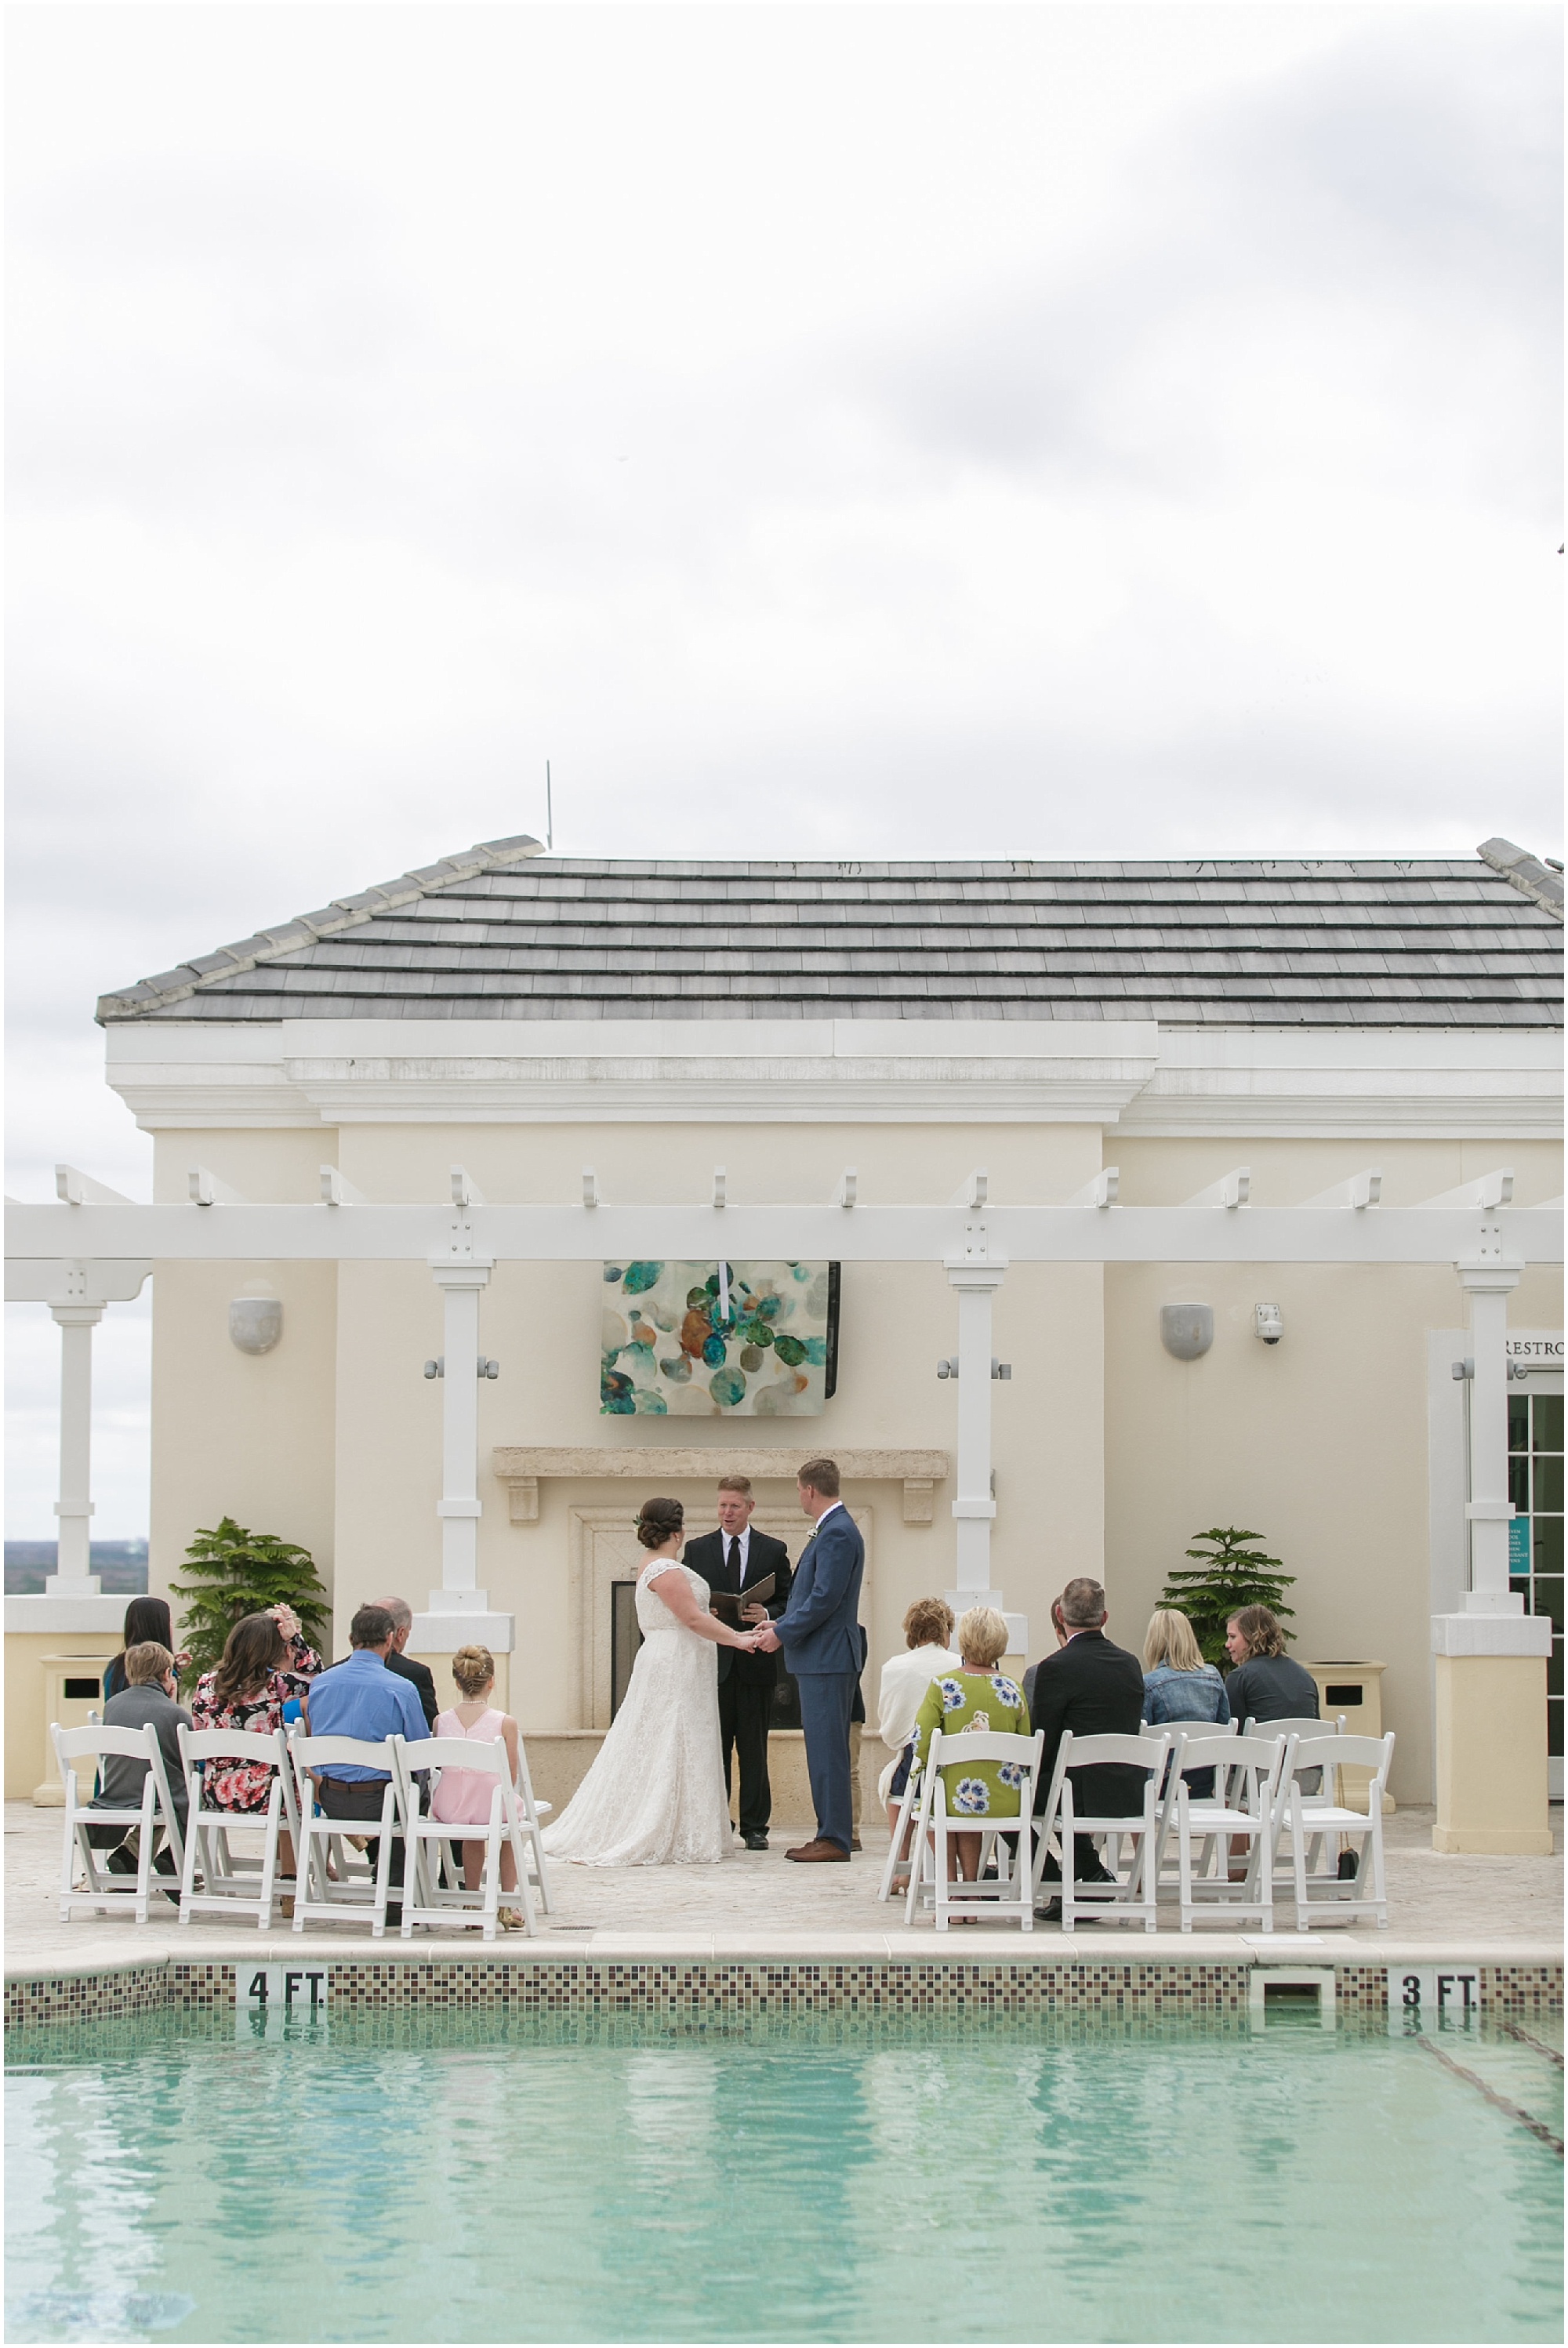 Beginning of the rooftop wedding ceremony. 